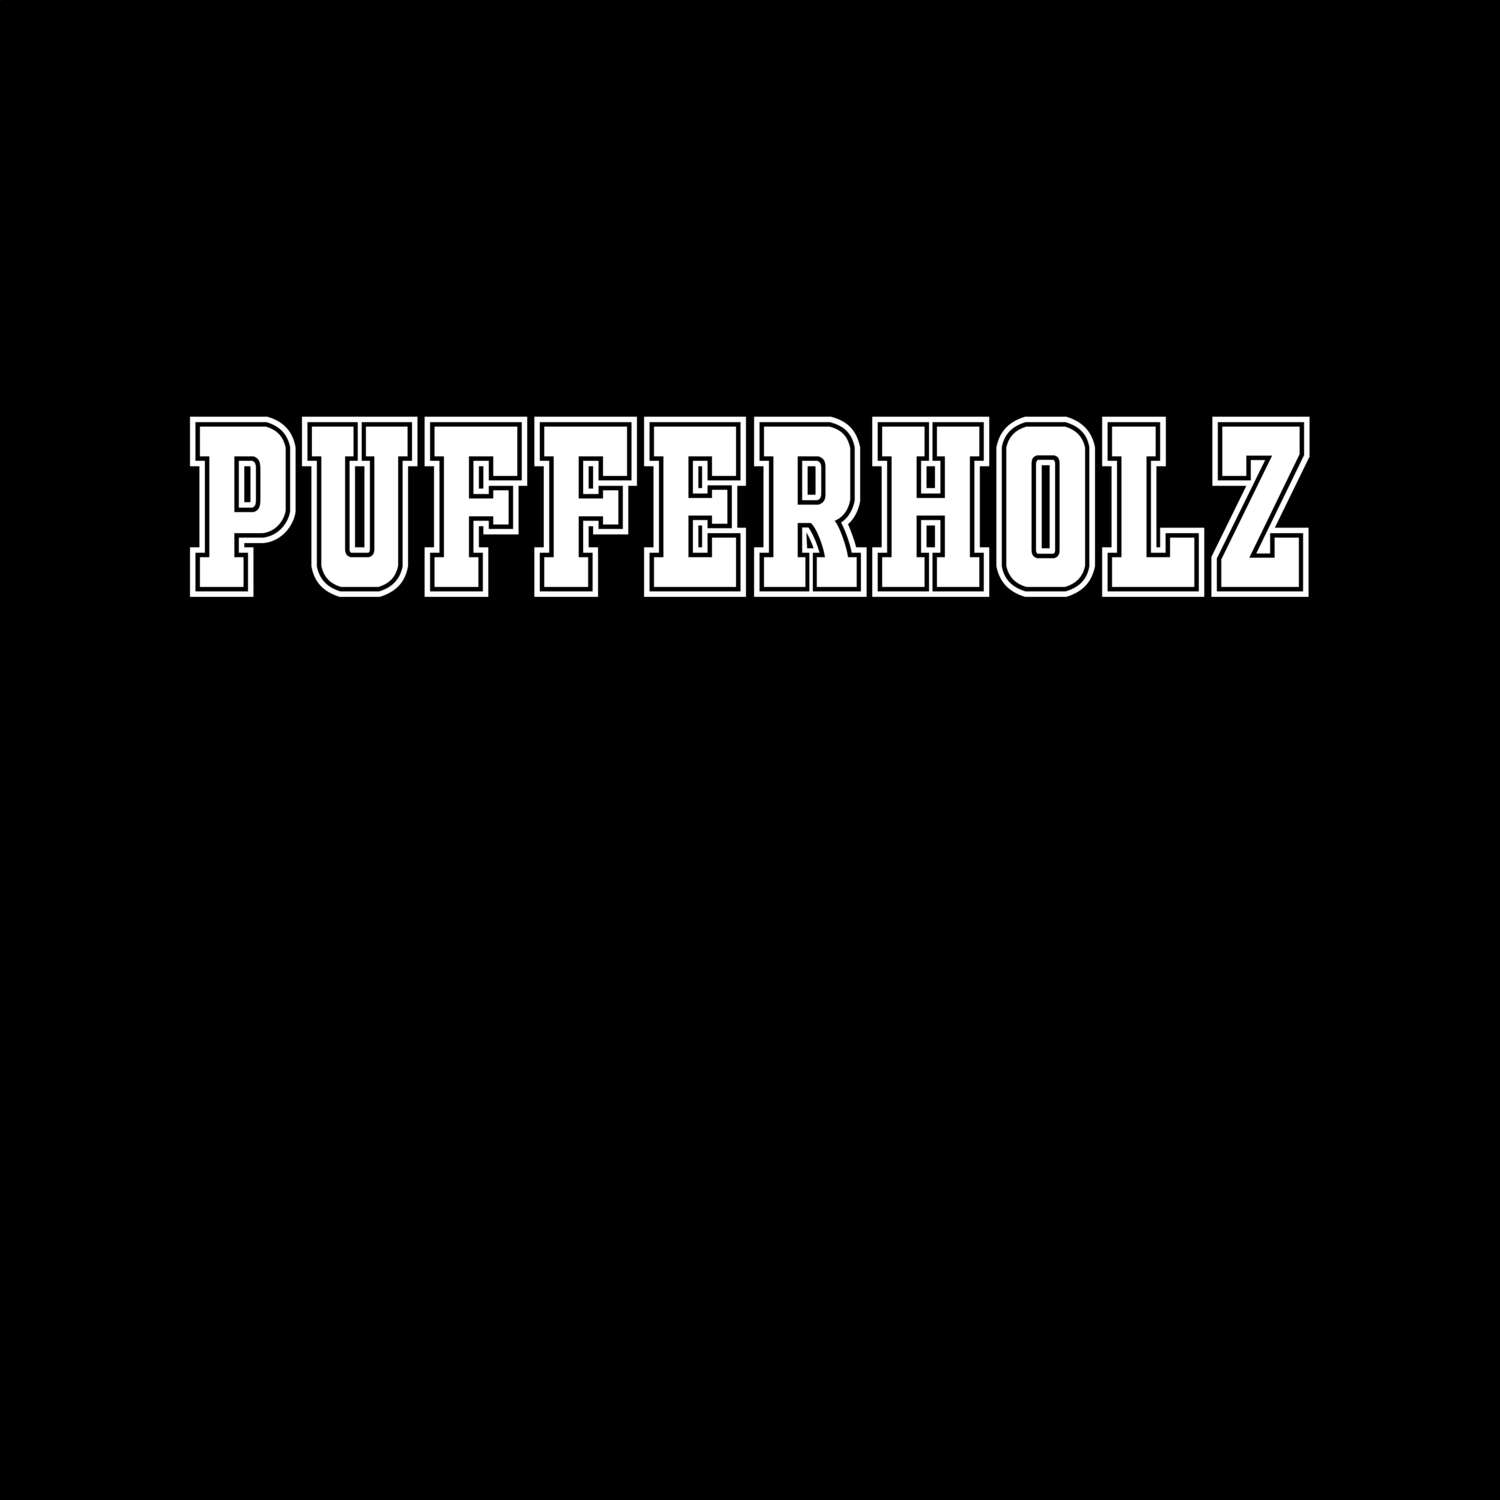 Pufferholz T-Shirt »Classic«